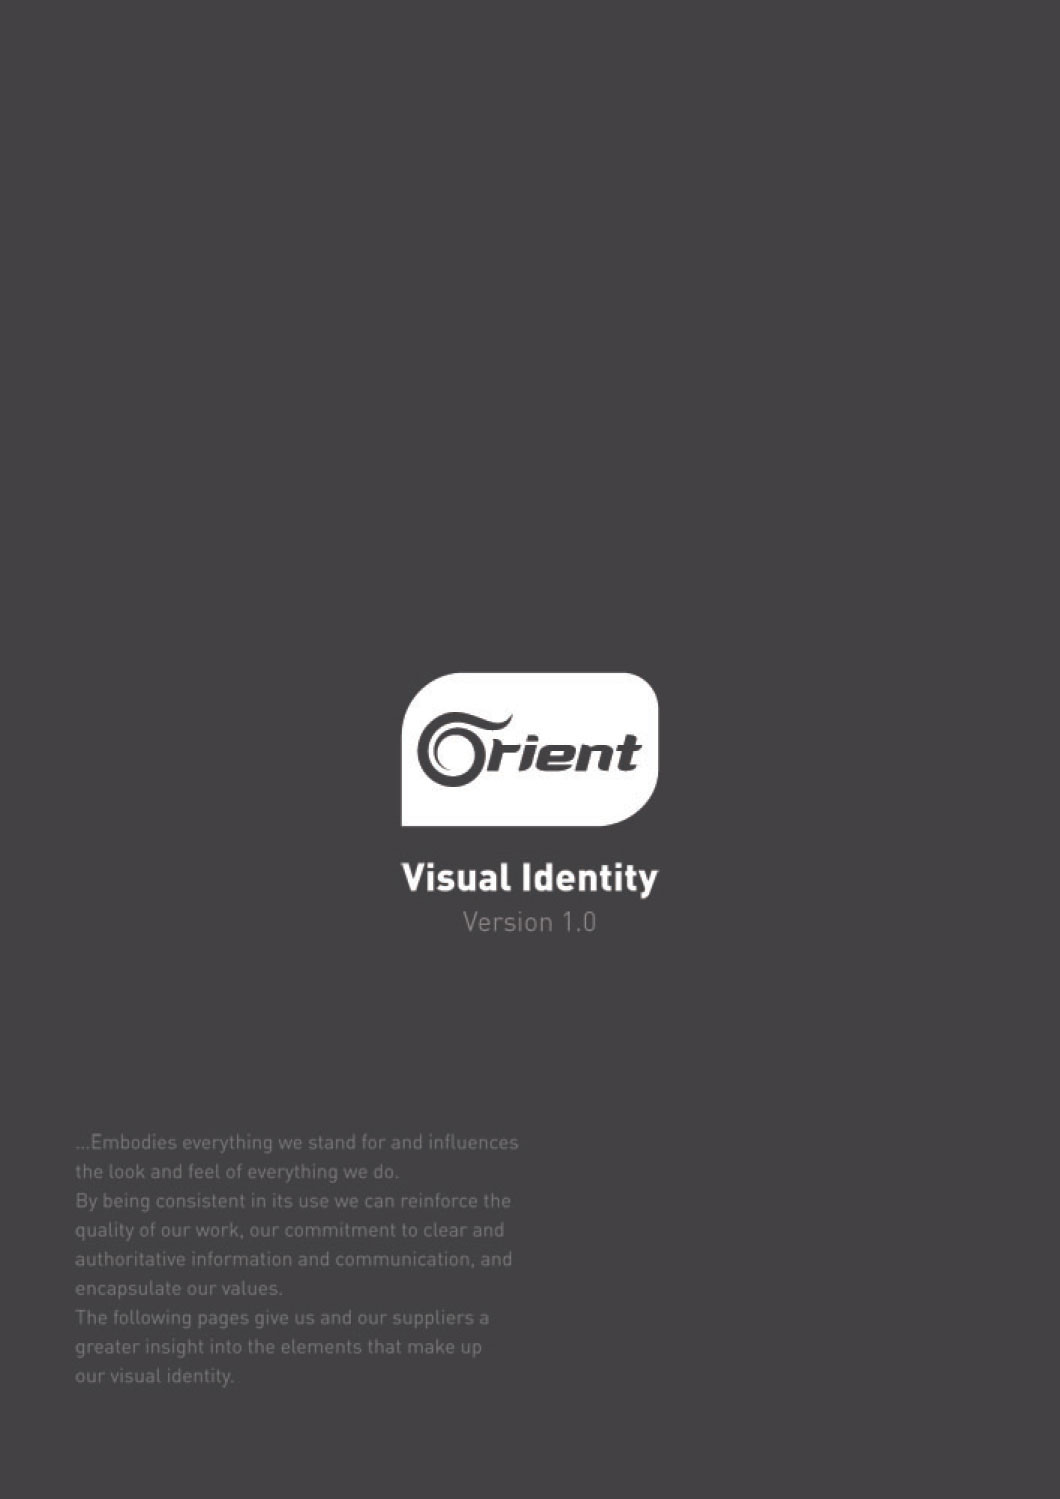 brand identity visual identity guidlines Orient Television branding 